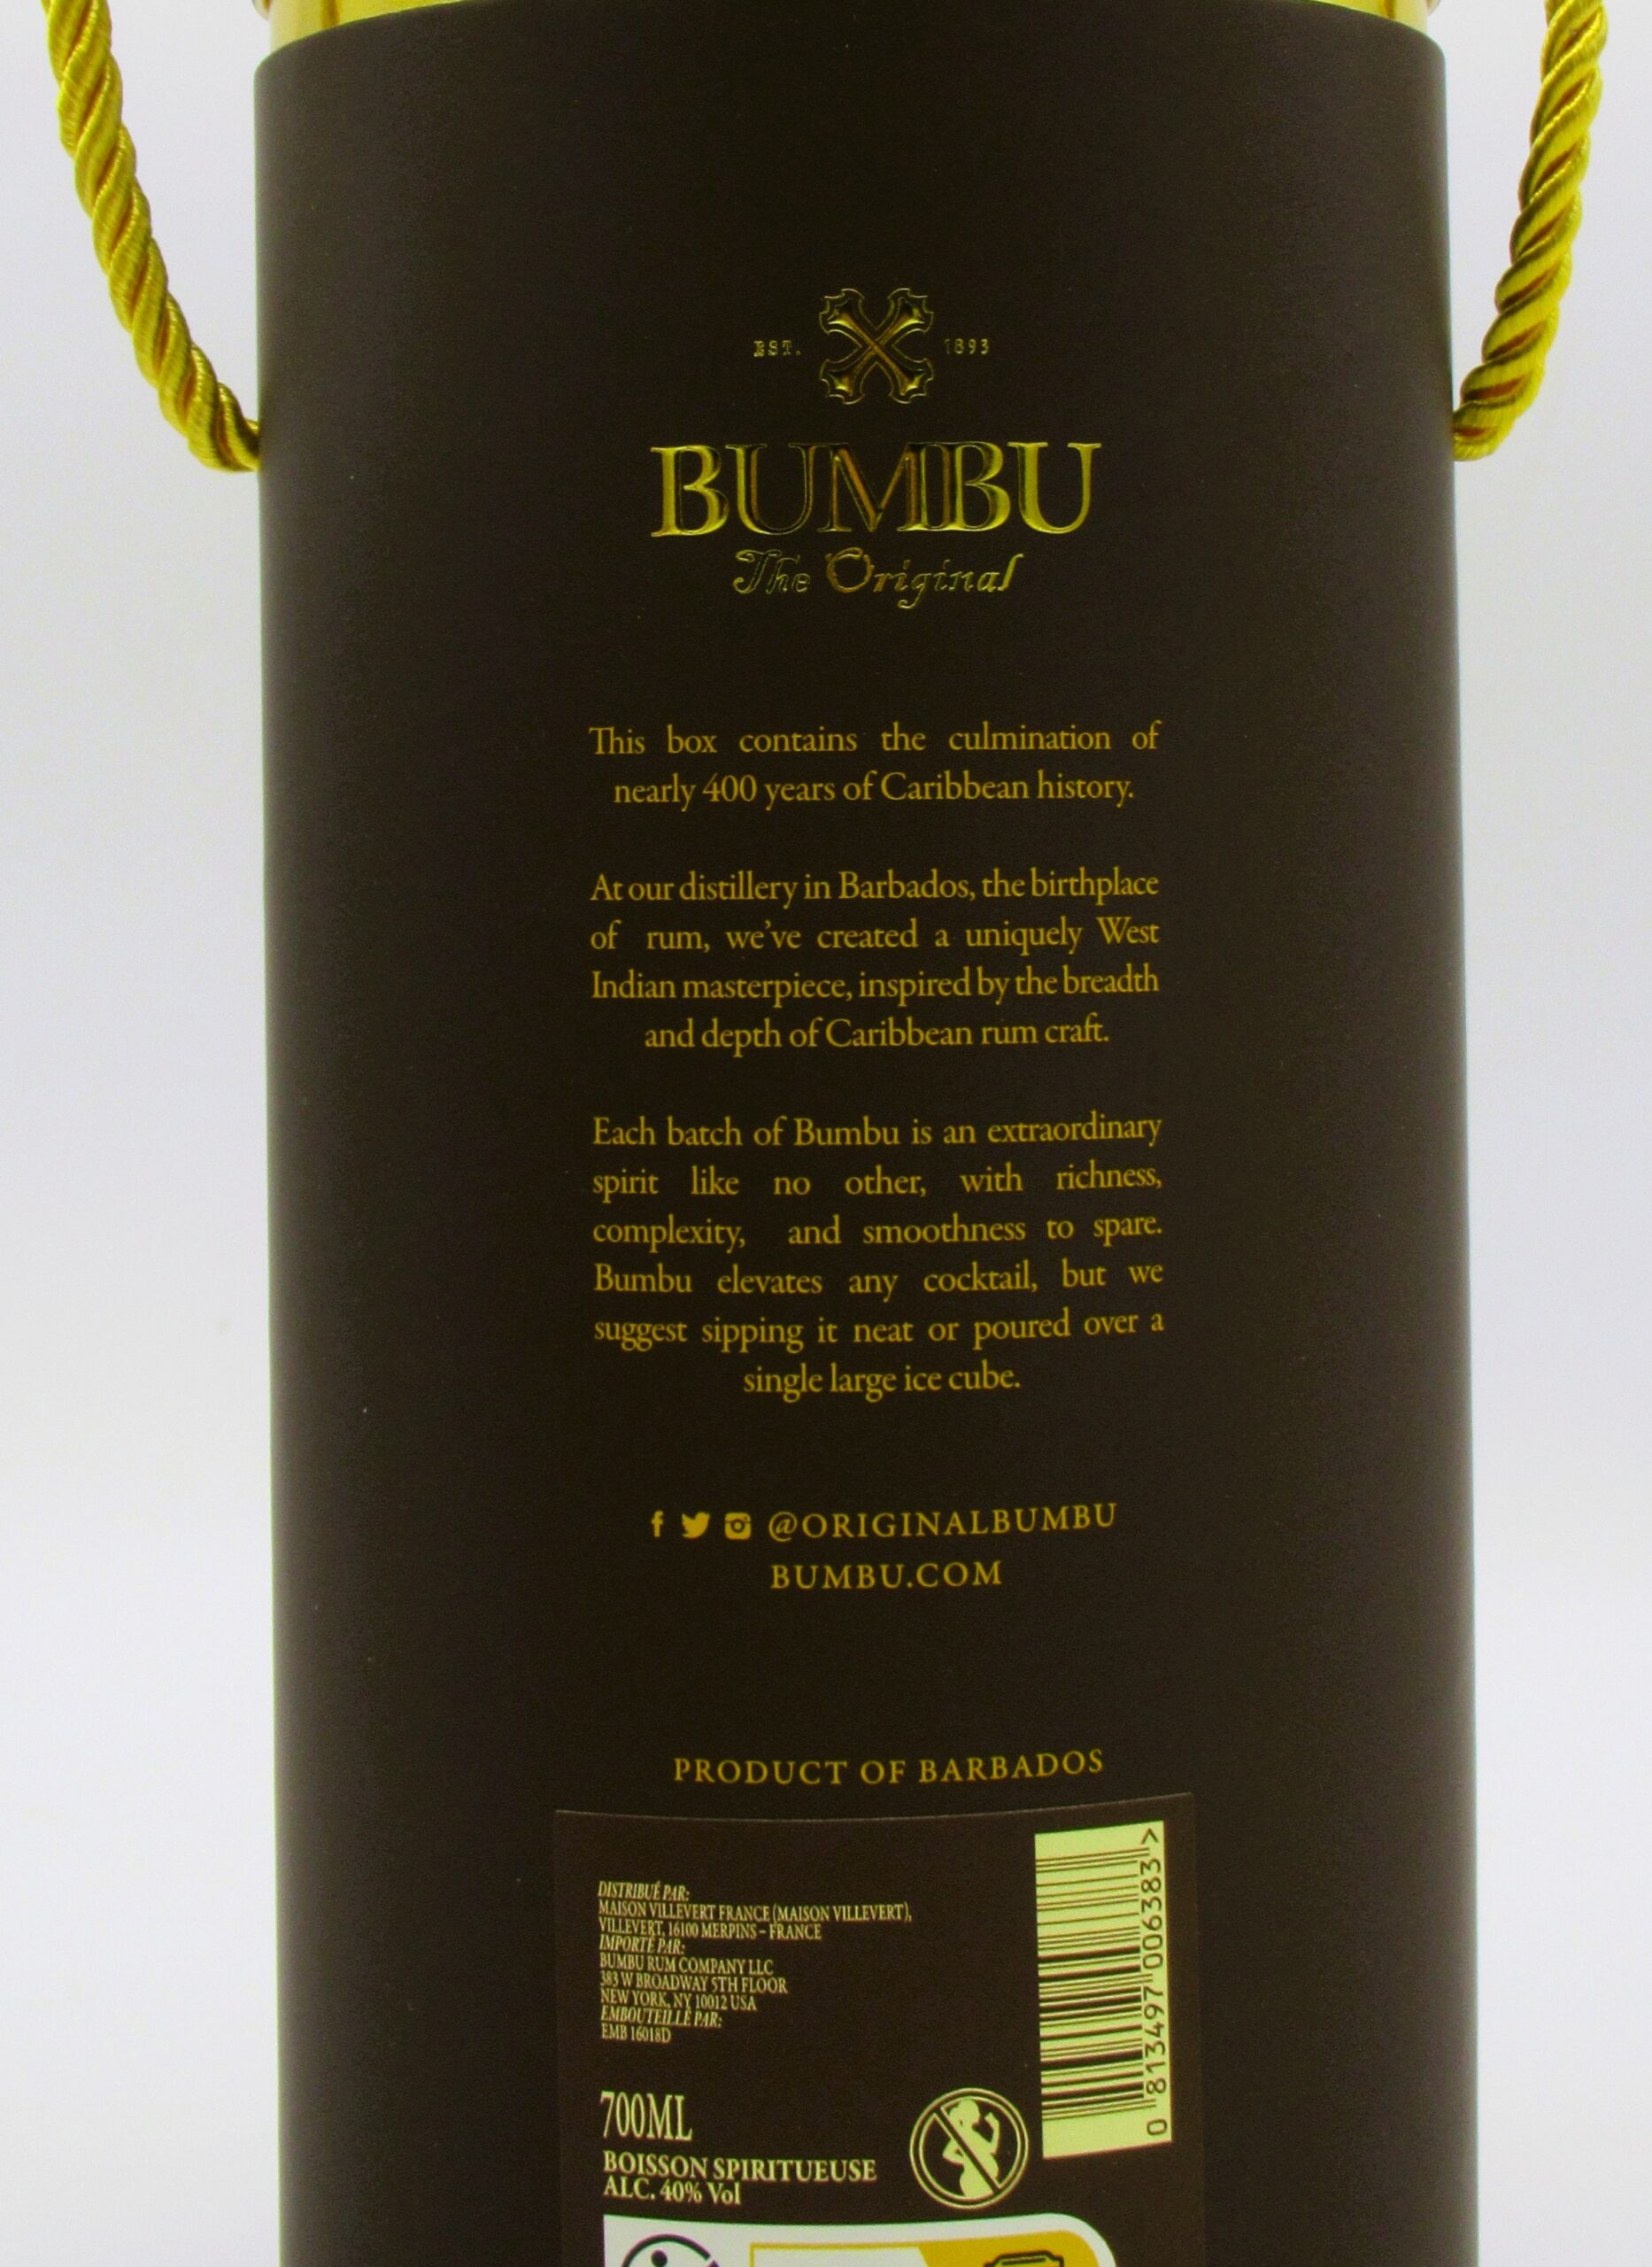 Acheter le Bumbu Rum Original rum rapidement en ligne